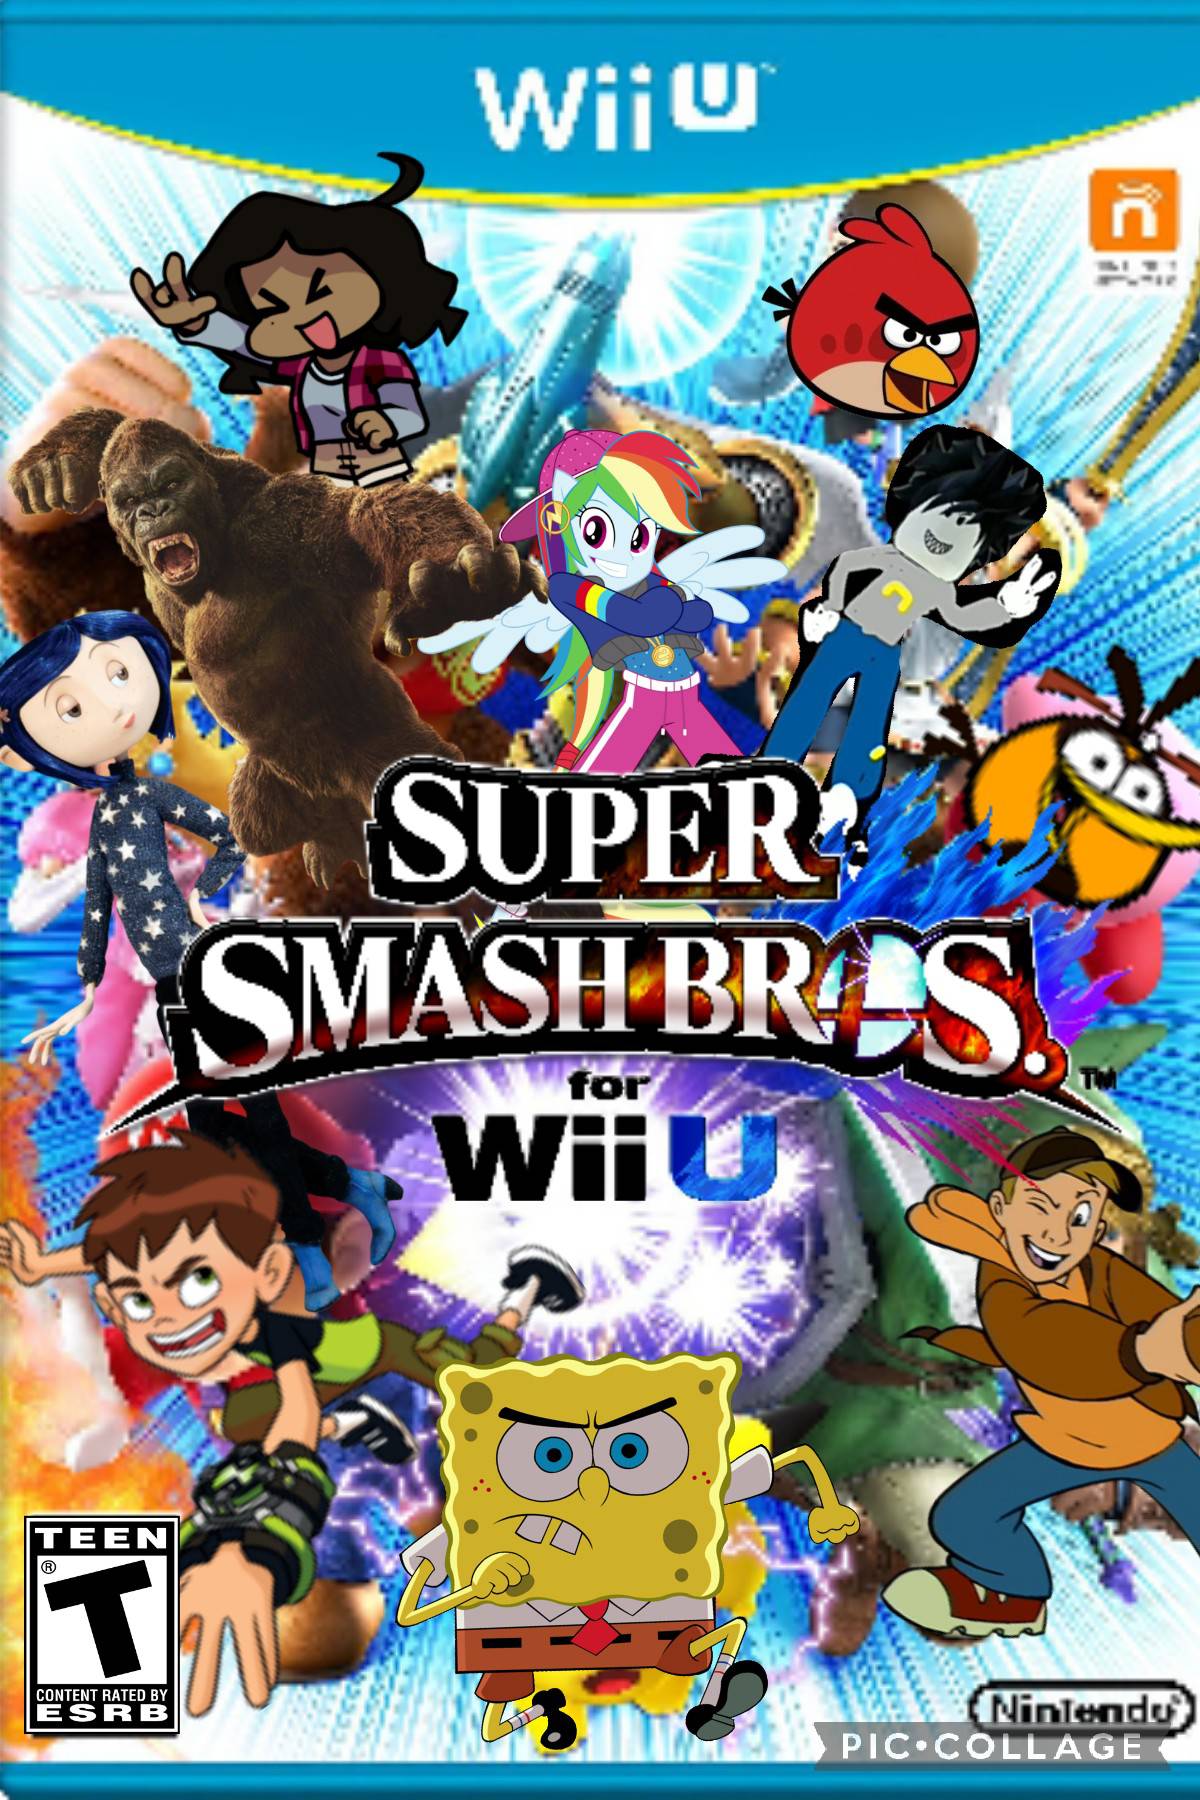 Luigi's mansion Wii Wii Box Art Cover by SmashBrosRocks123